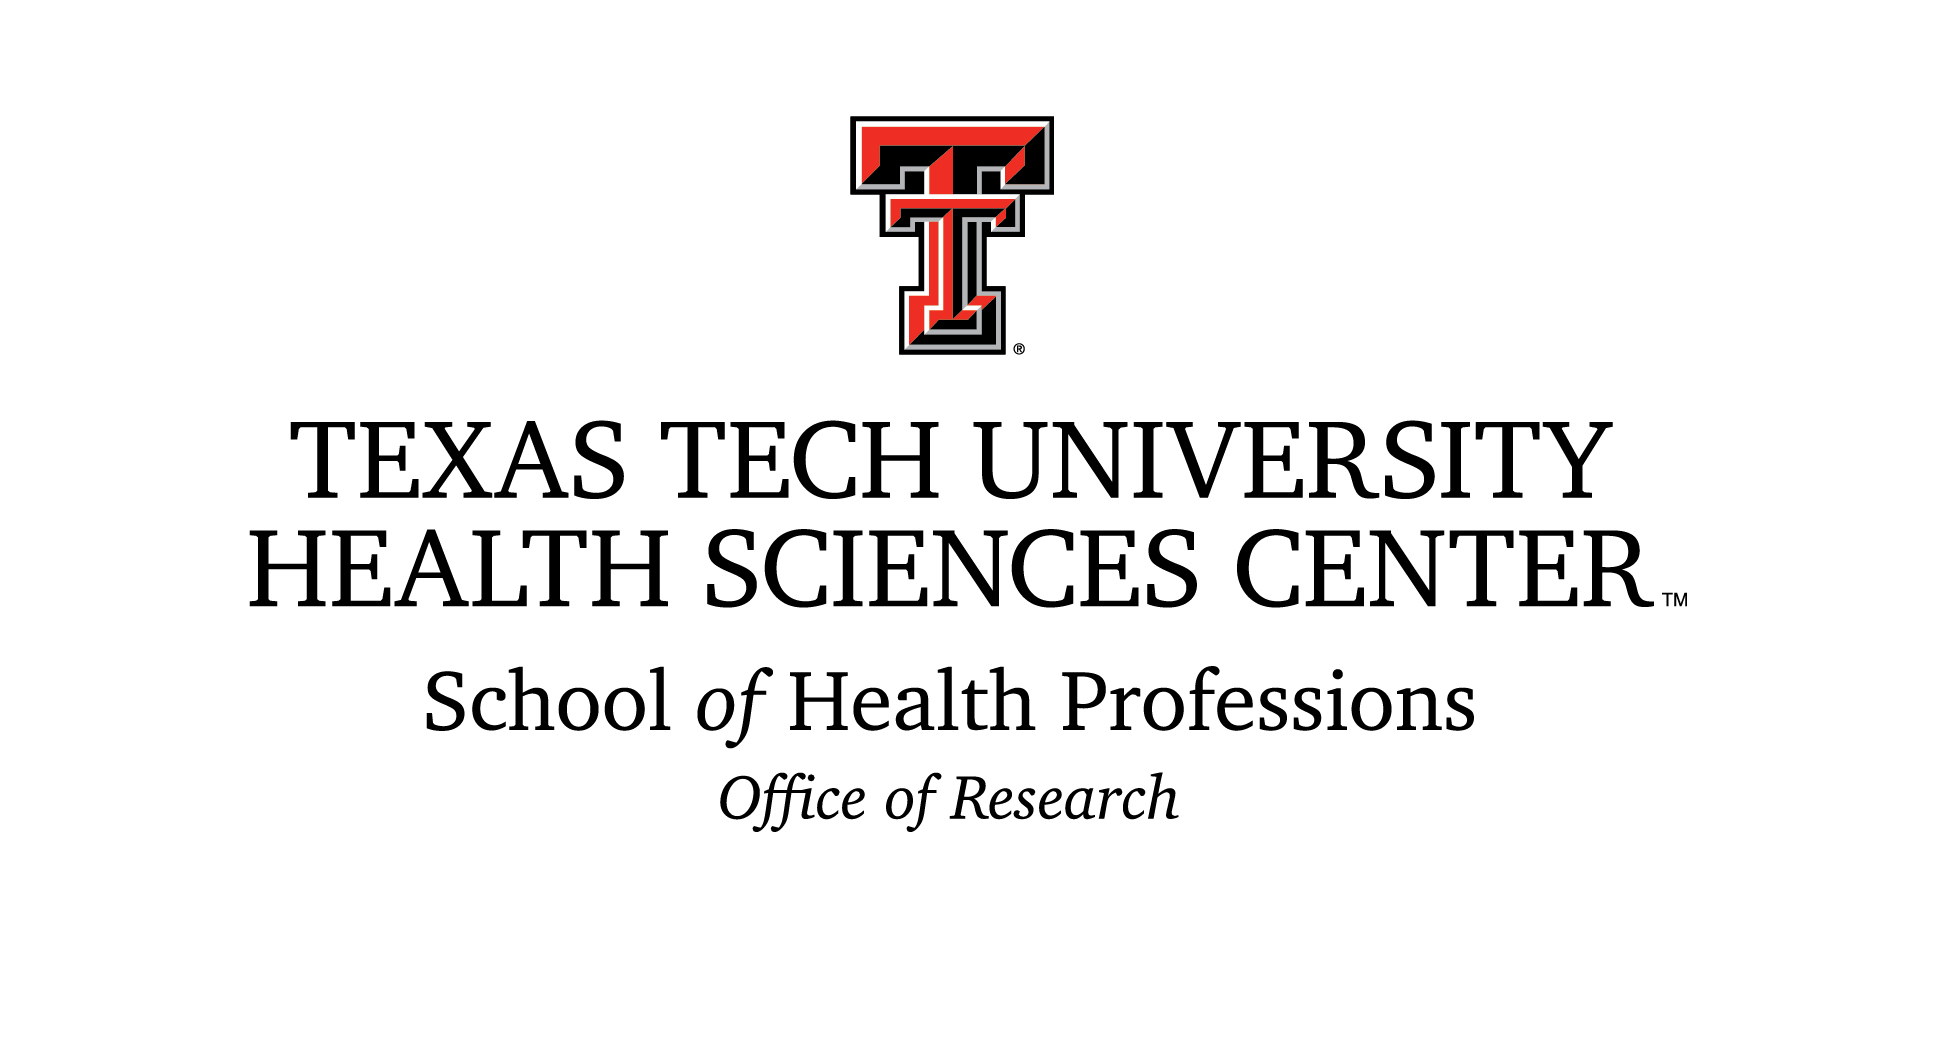 Texas Tech University Health Science Center School of Health Professions